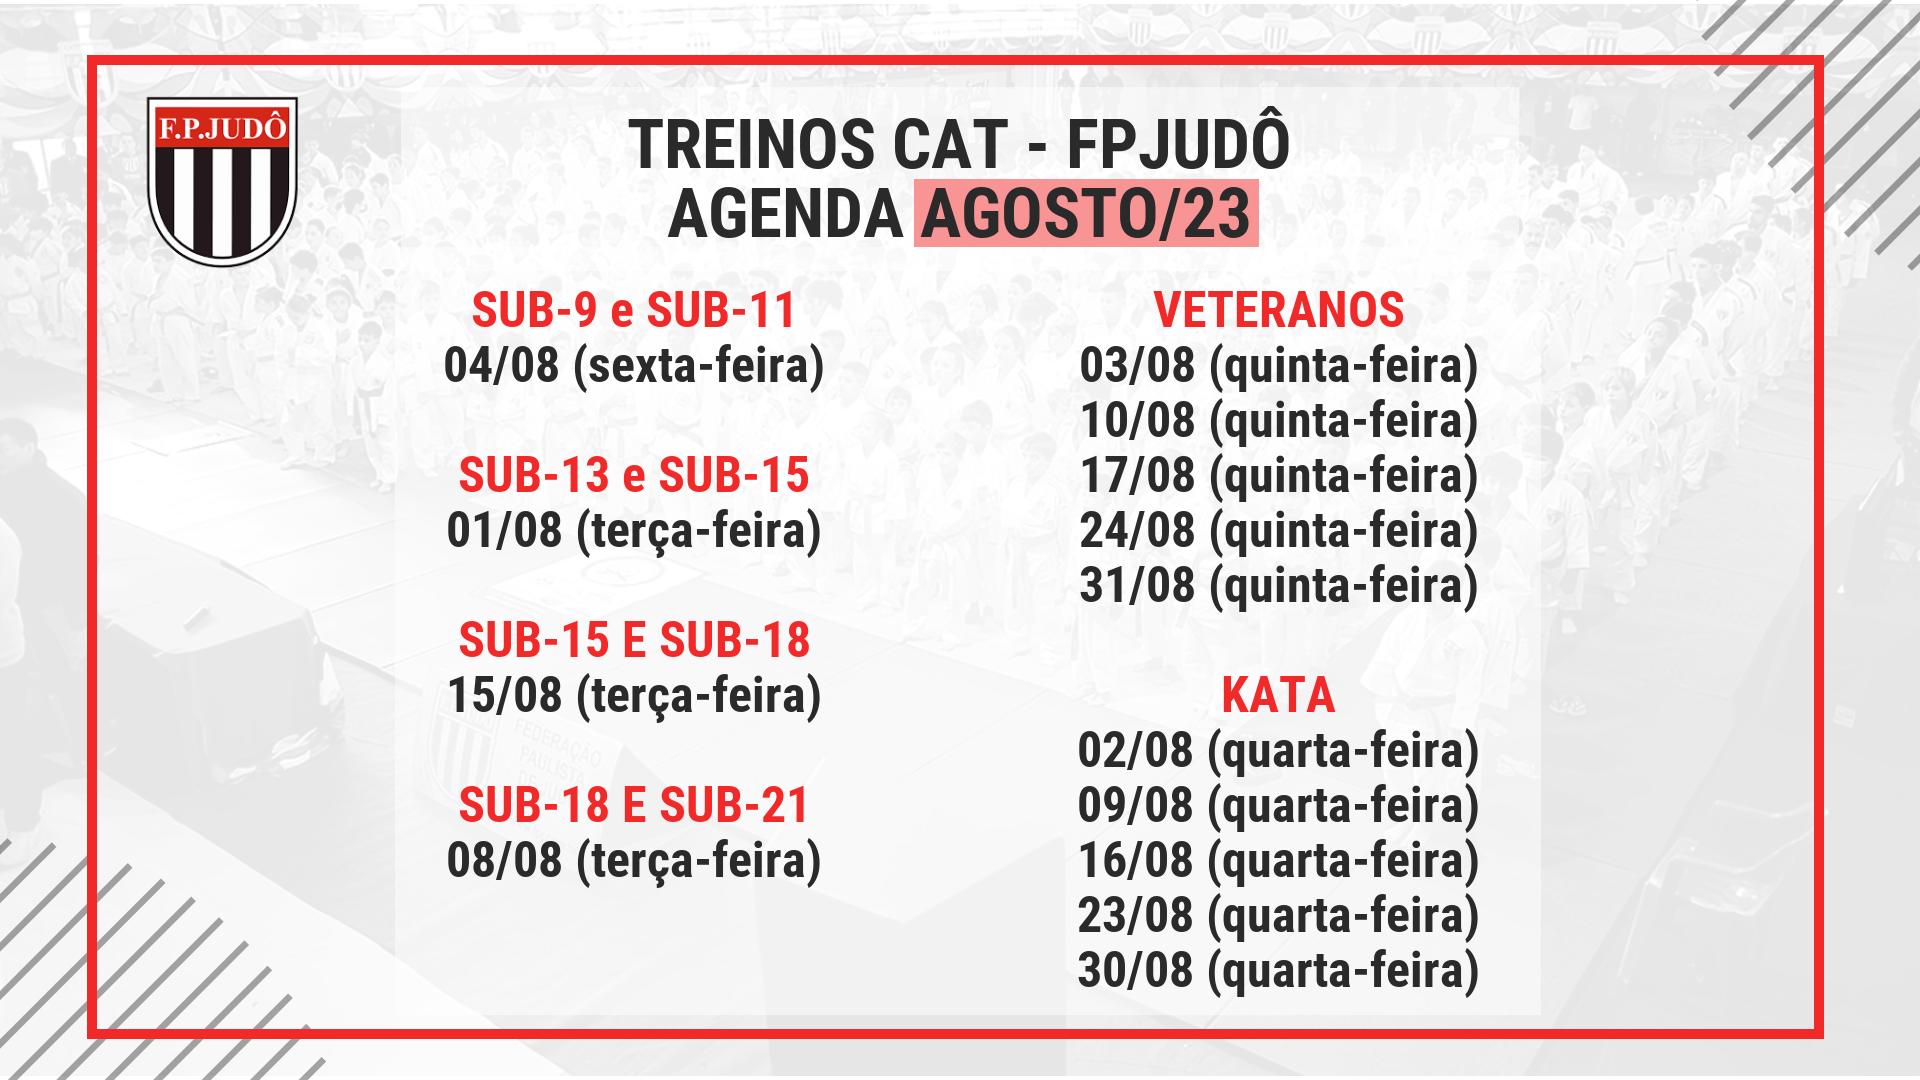 2023-07-31 - Informativo Treino CAT (wide)